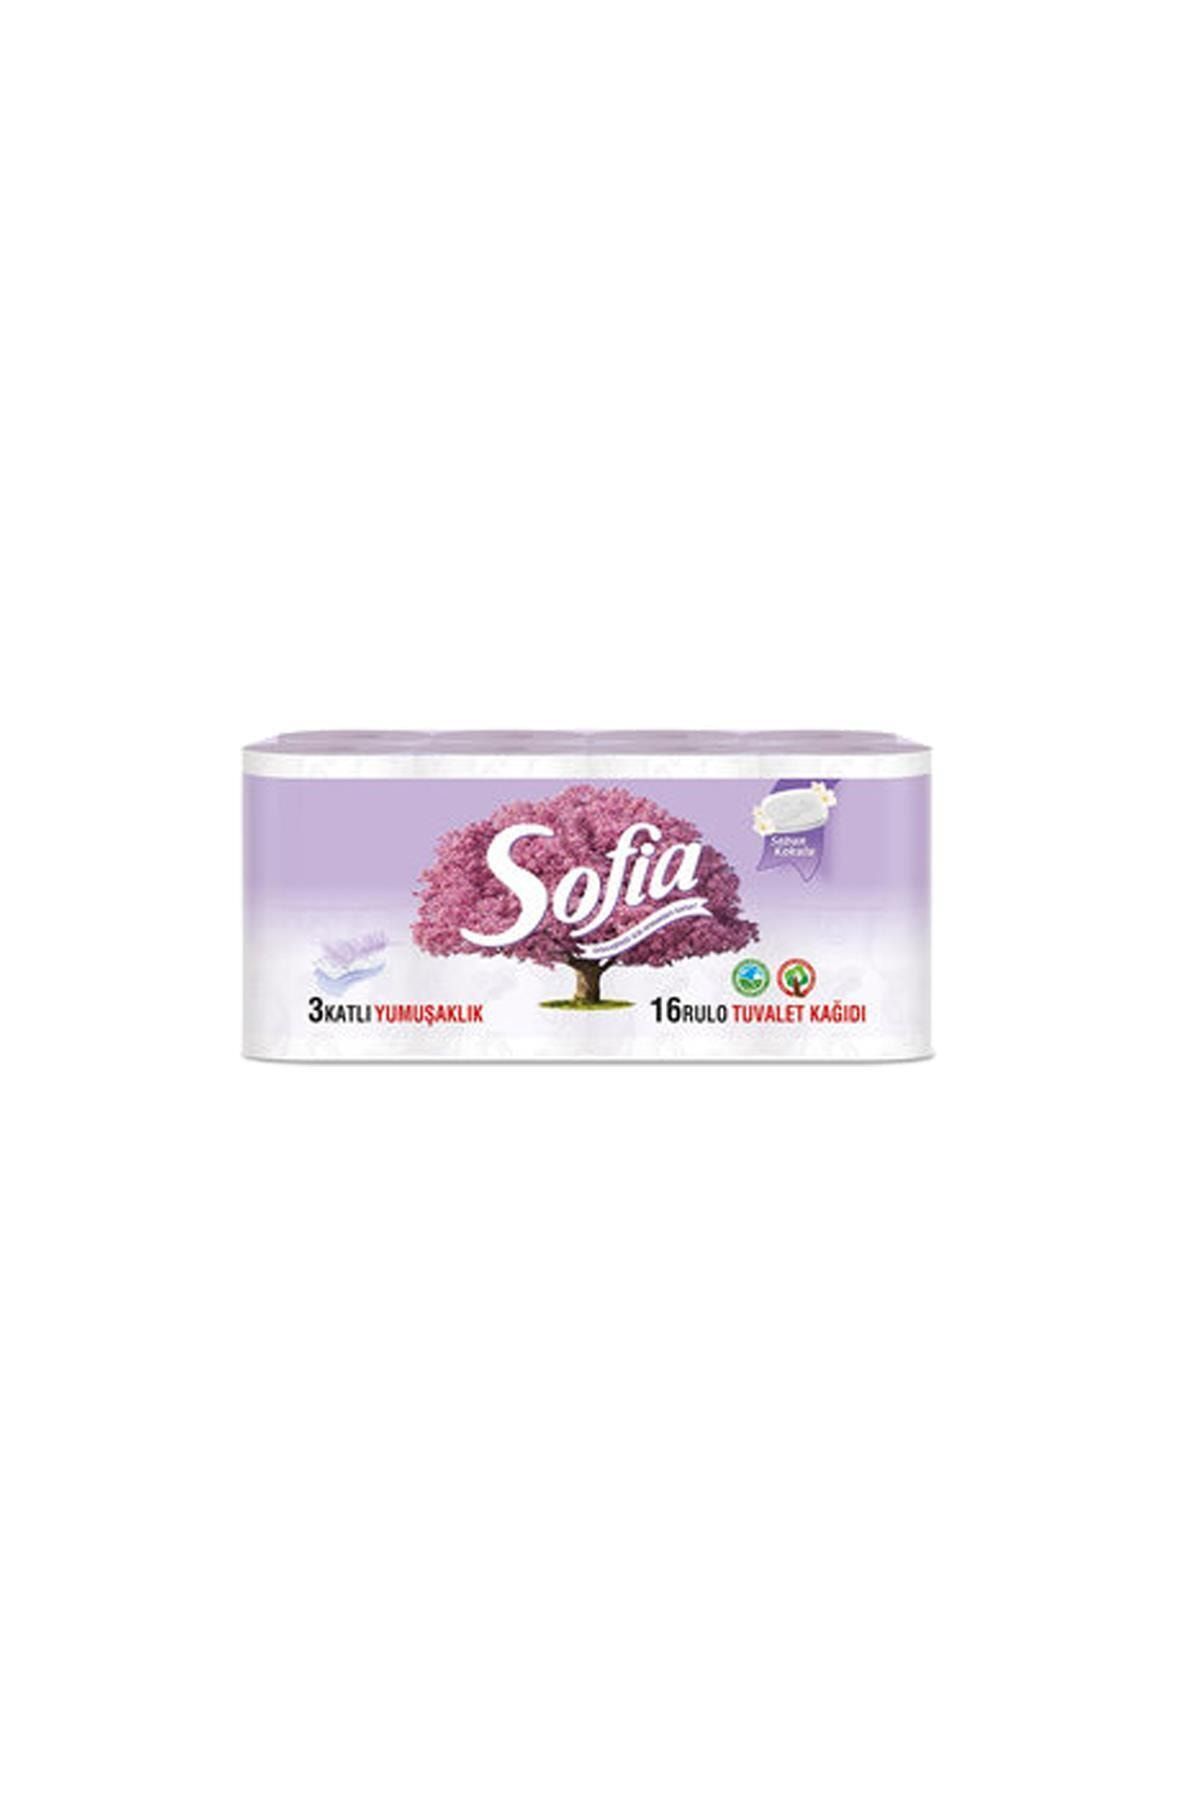 Sofia 3 Katlı Sabun Kokulu Tuvalet Kağıdı - 1 Paket 16 Rulo